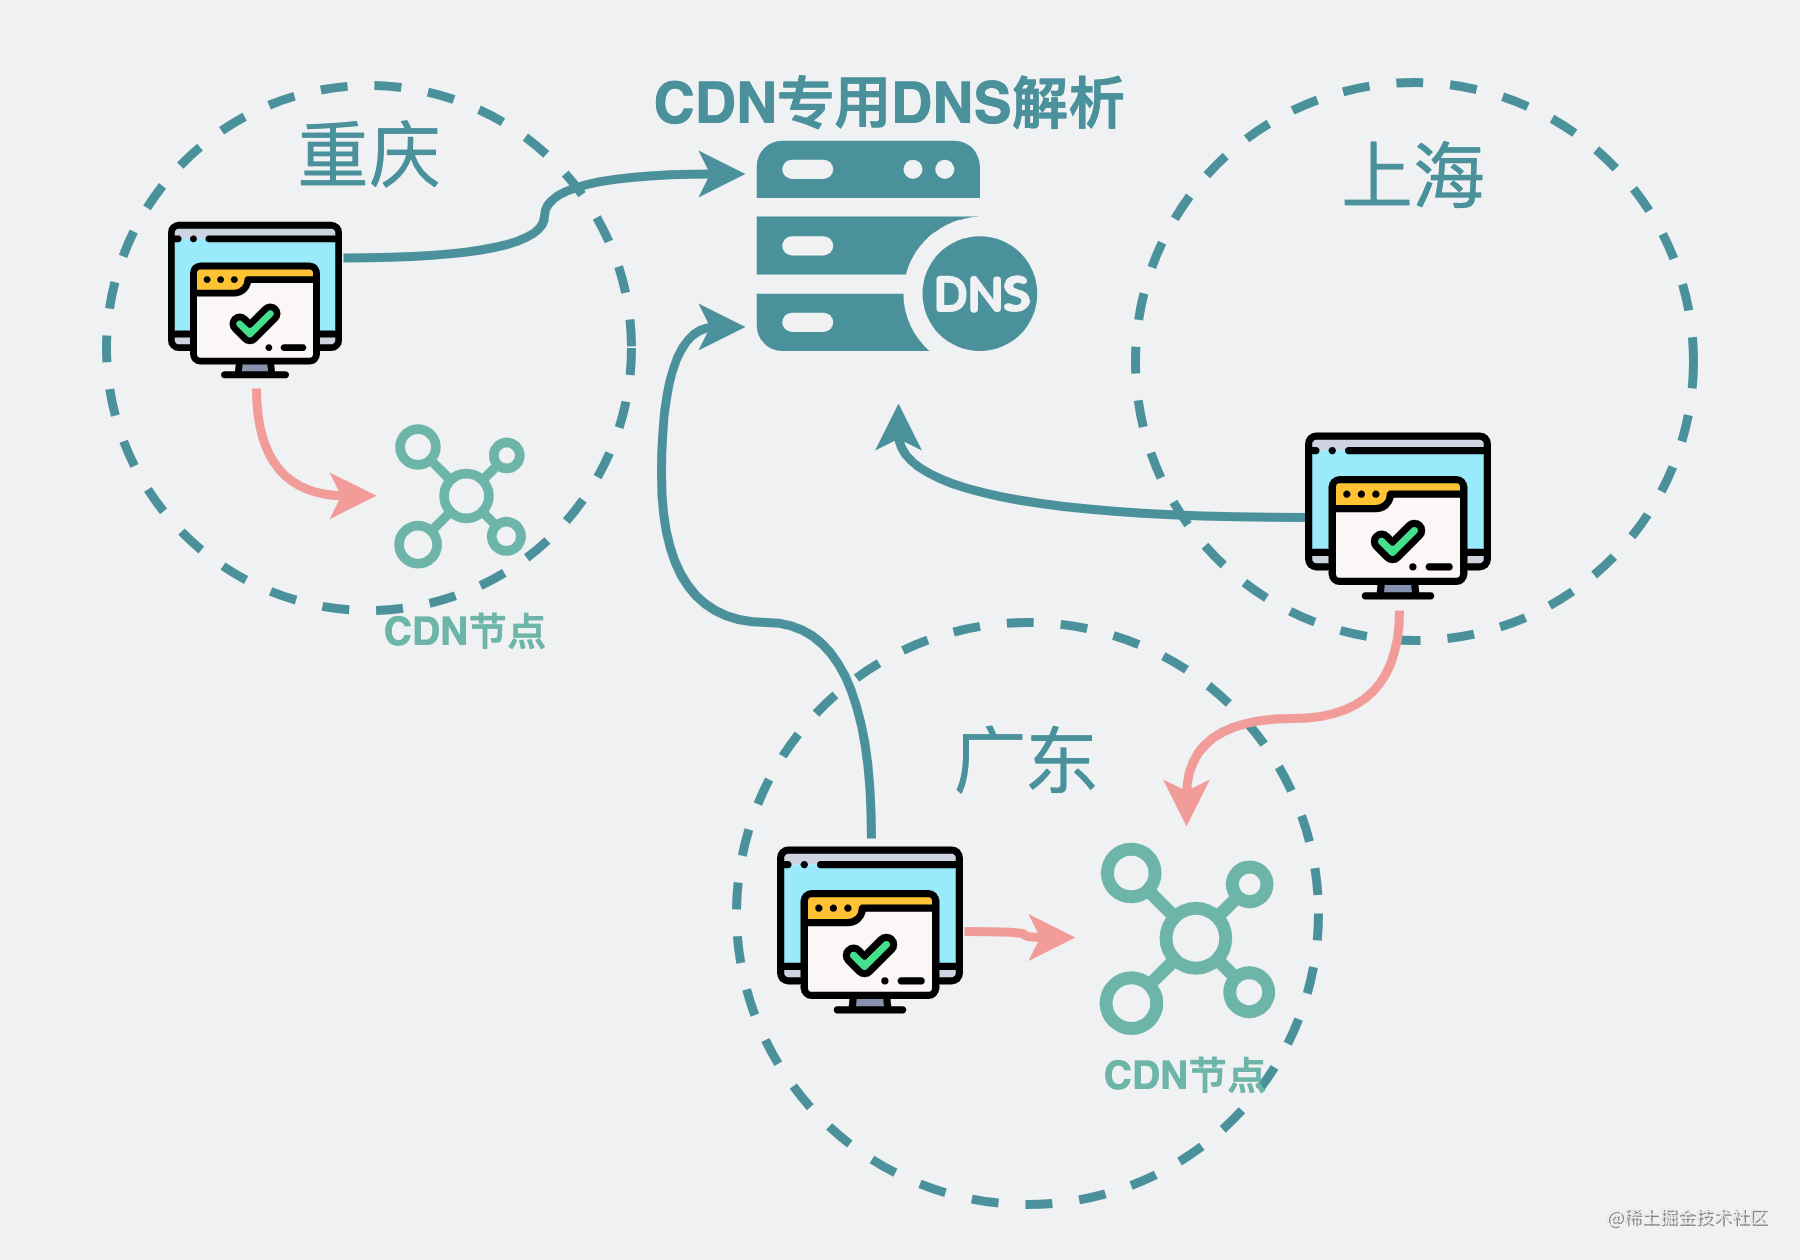 CDN专用的DNS解析服务器会返回就近的CDN节点IP